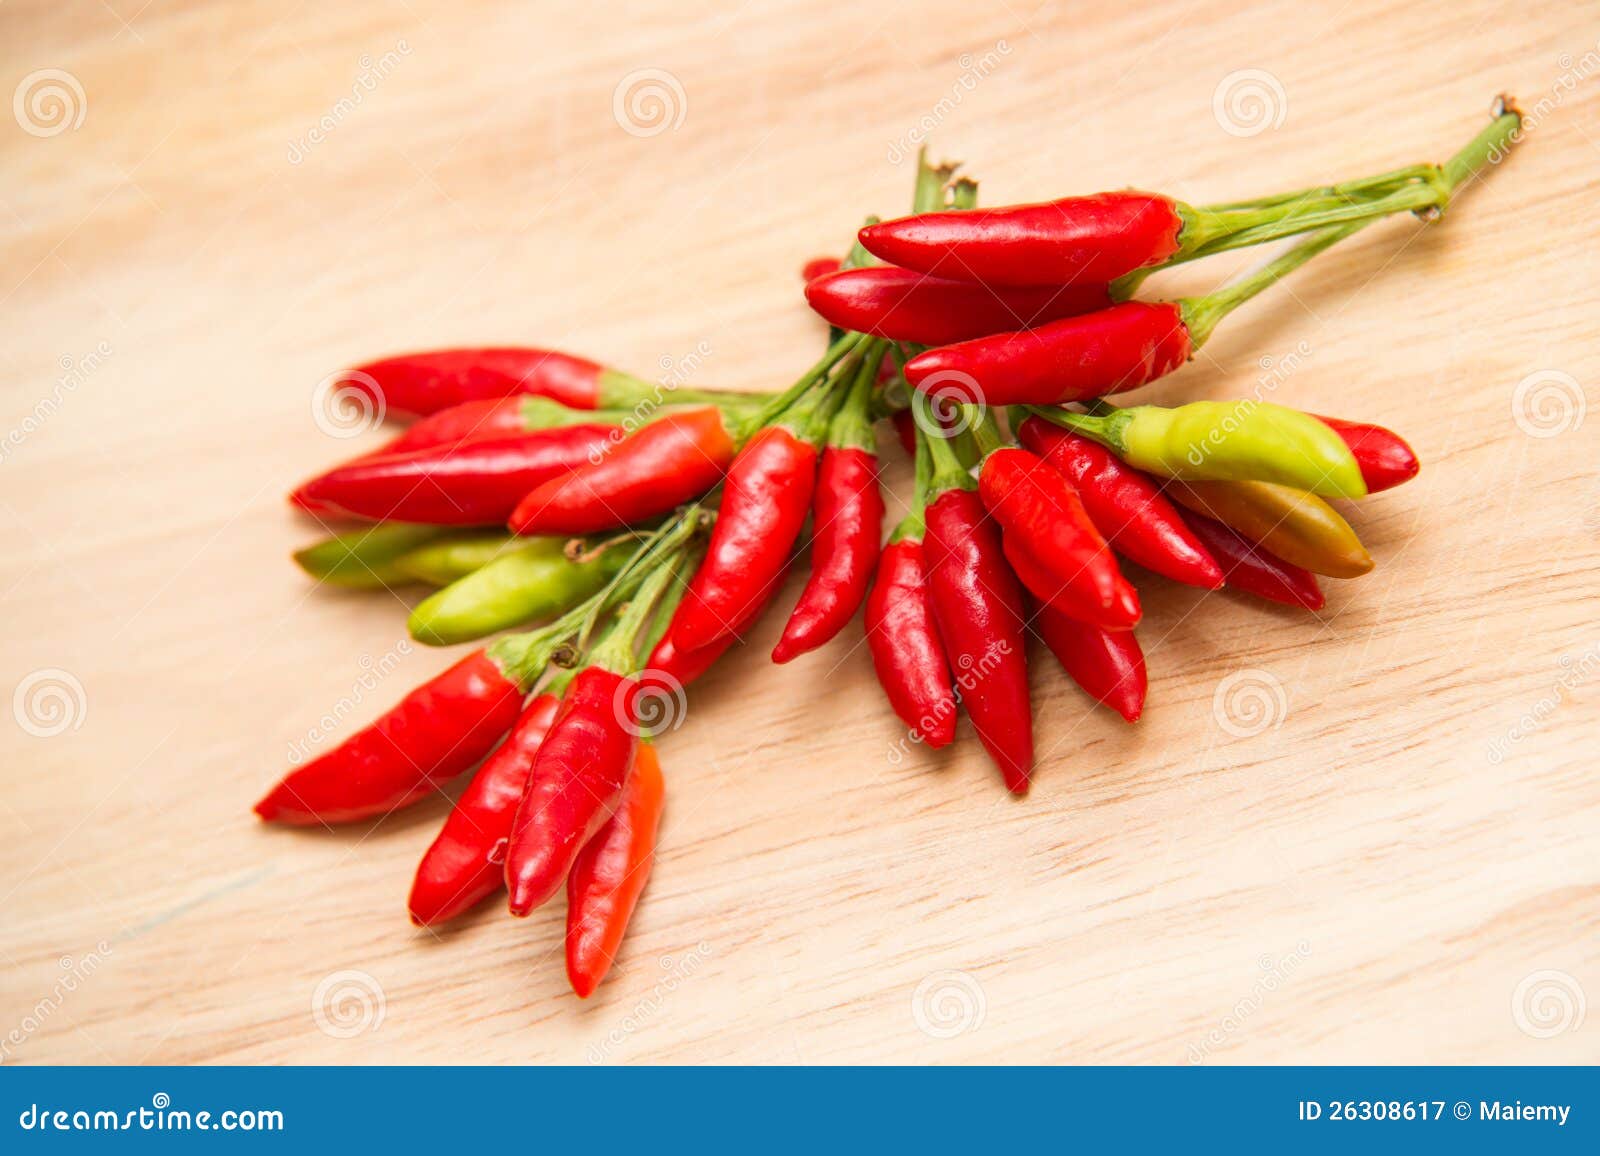 calabrian hot pepper very hot chili